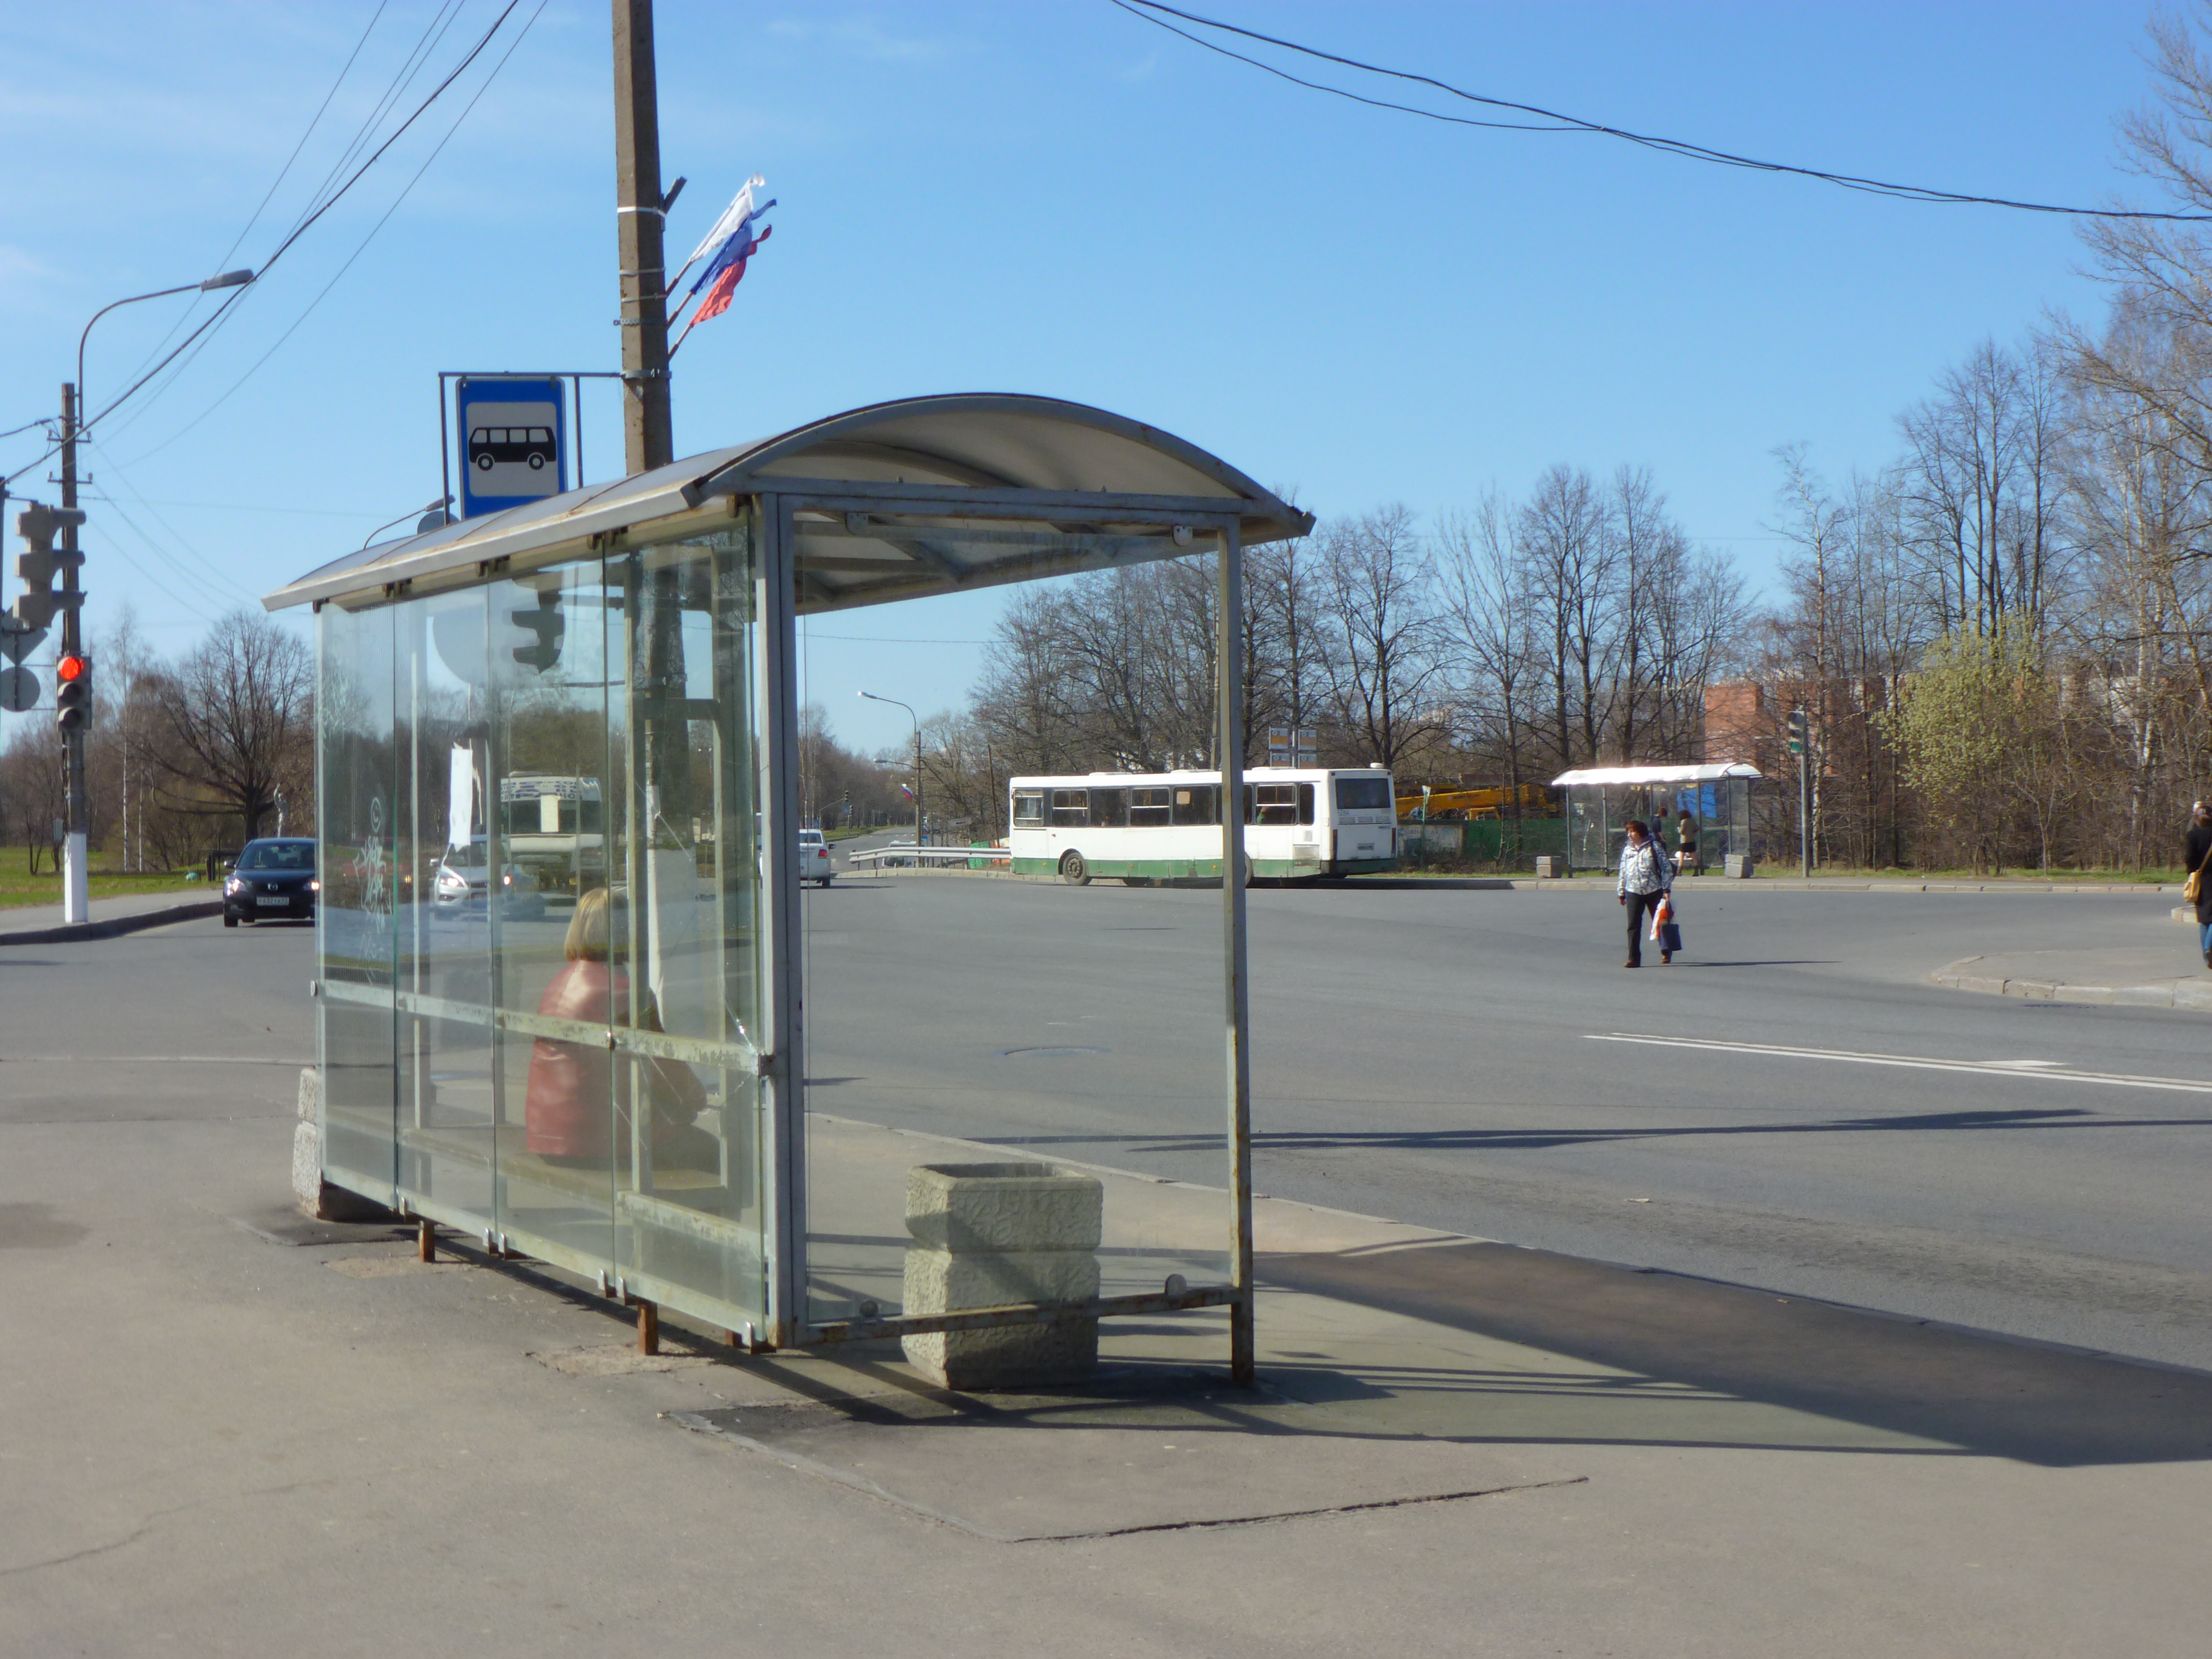 Рф остановиться. Автобусная остановка. Автобусная остановка в России. Остановка в Санкт-Петербурге. Красивые автобусные остановки.